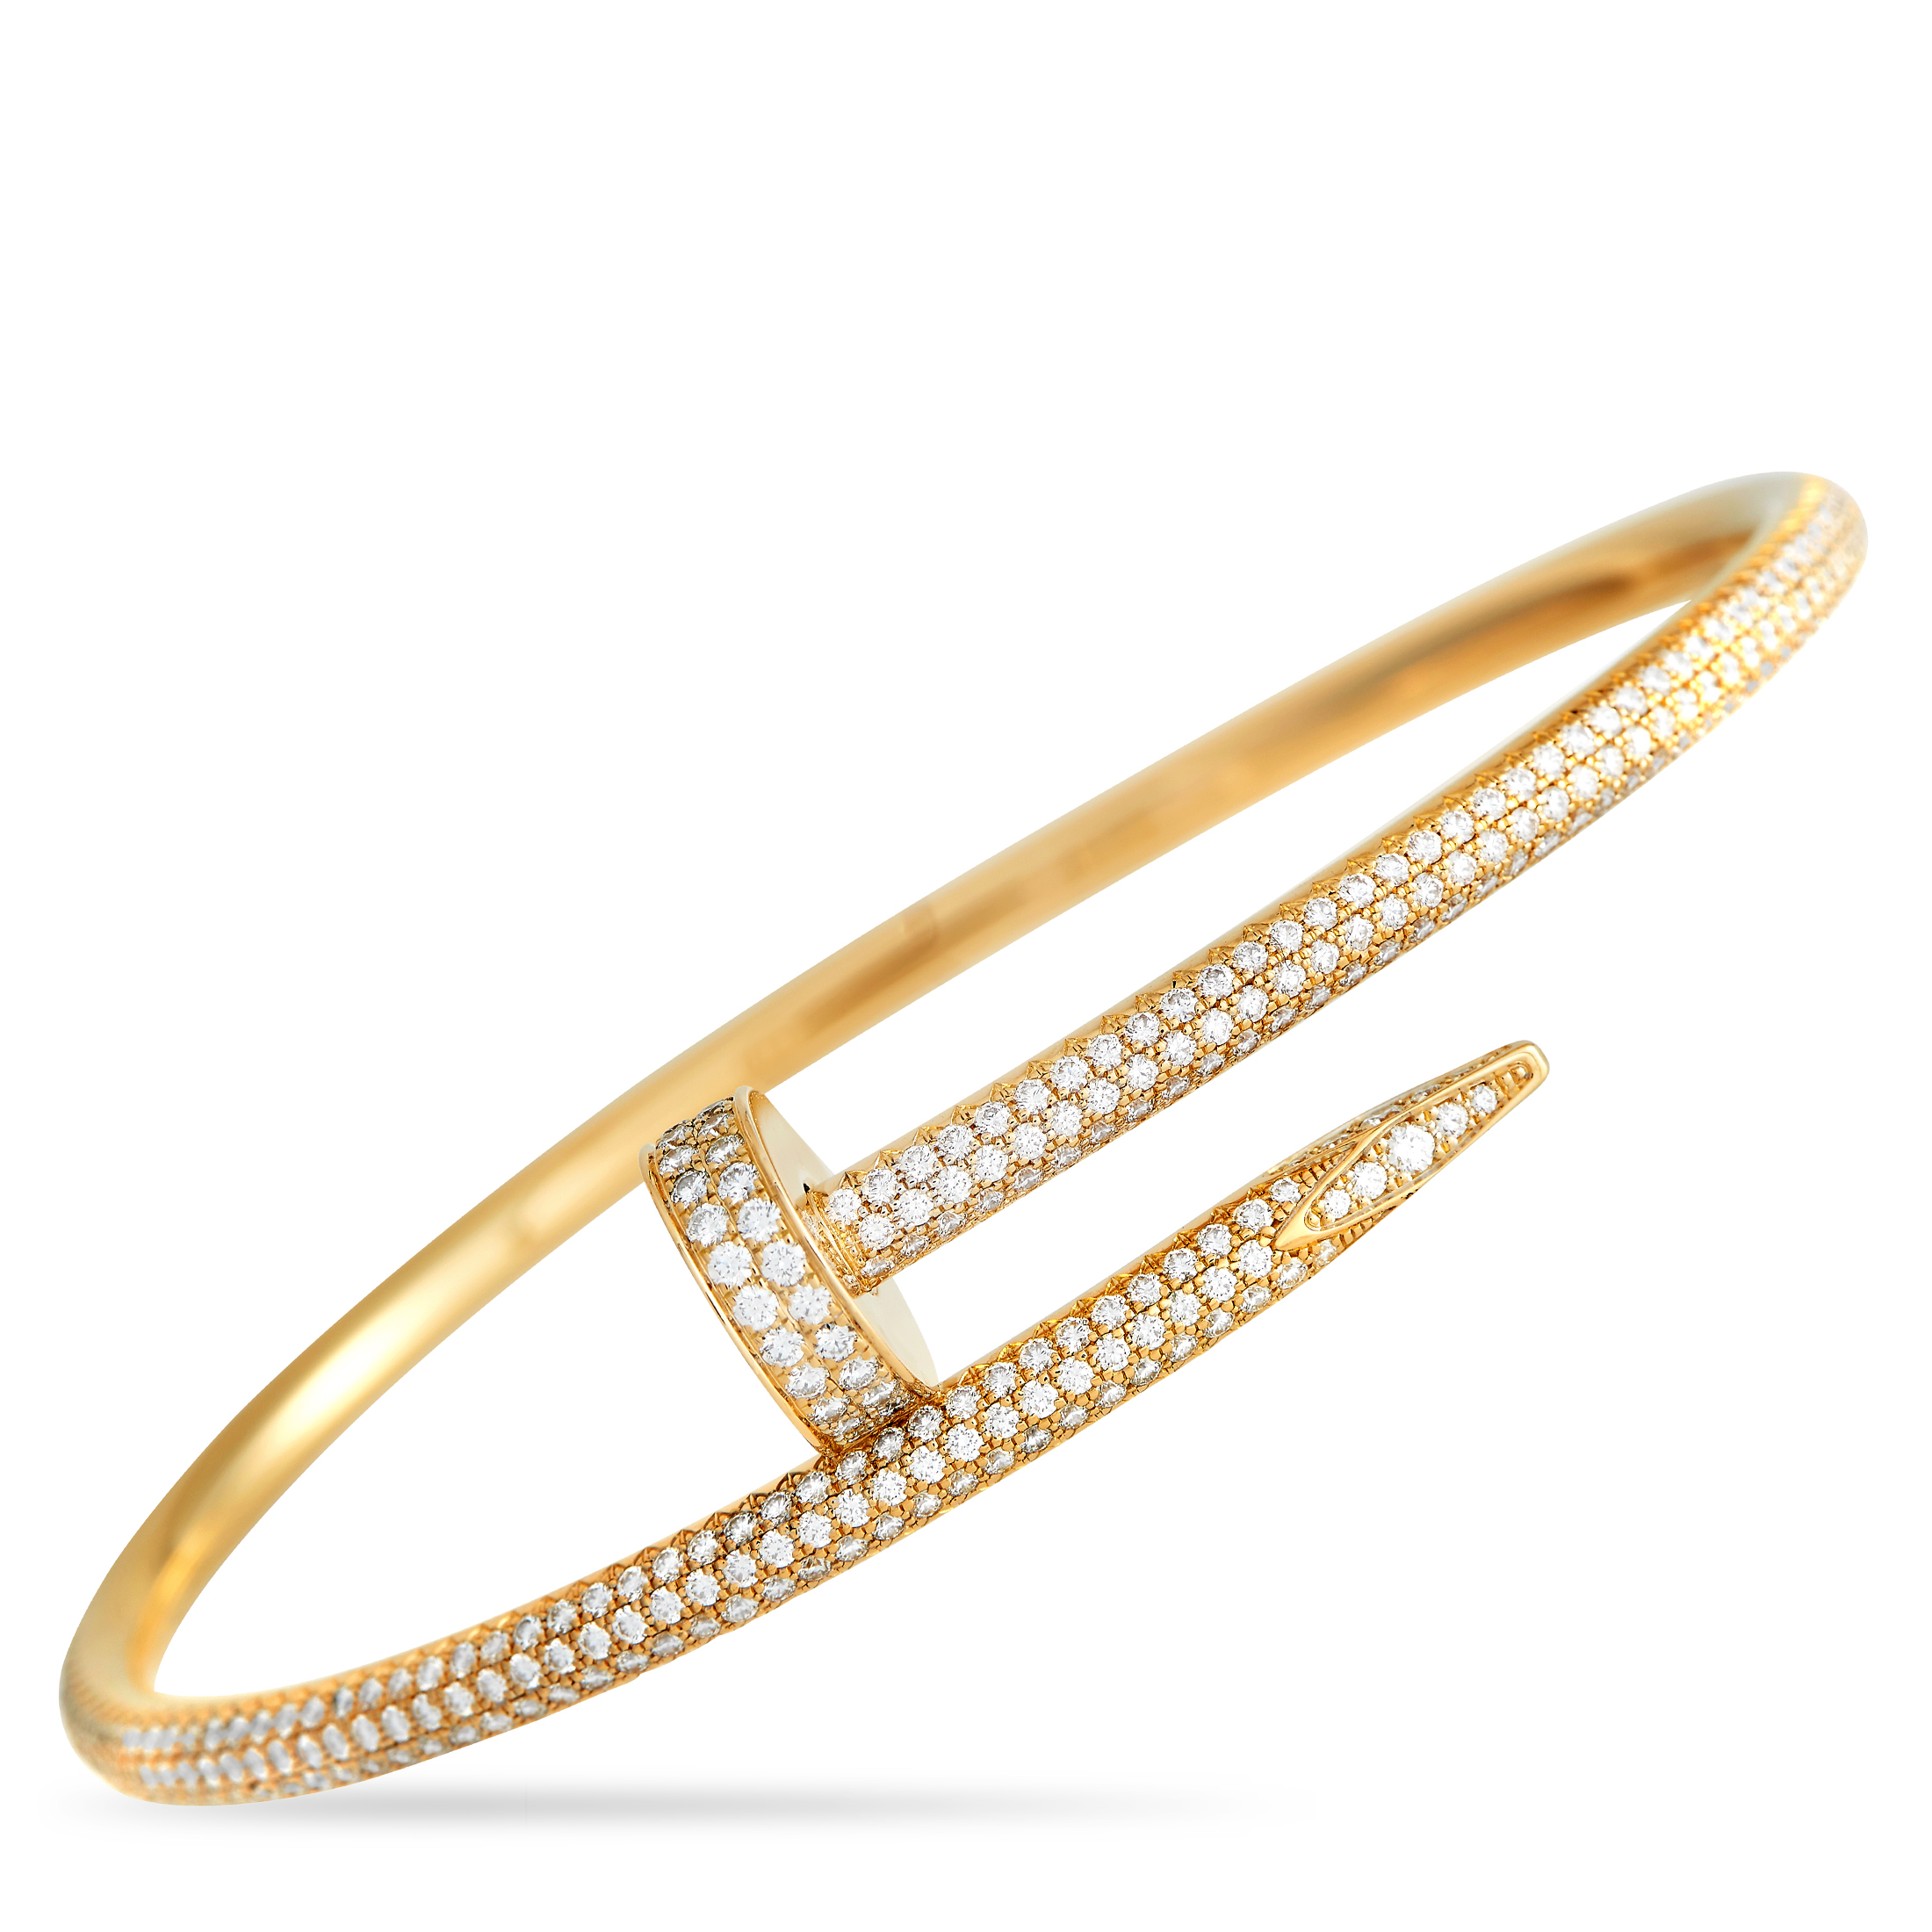 Cartier Rose Gold And Diamond Juste Un Clou Bangle Bracelet